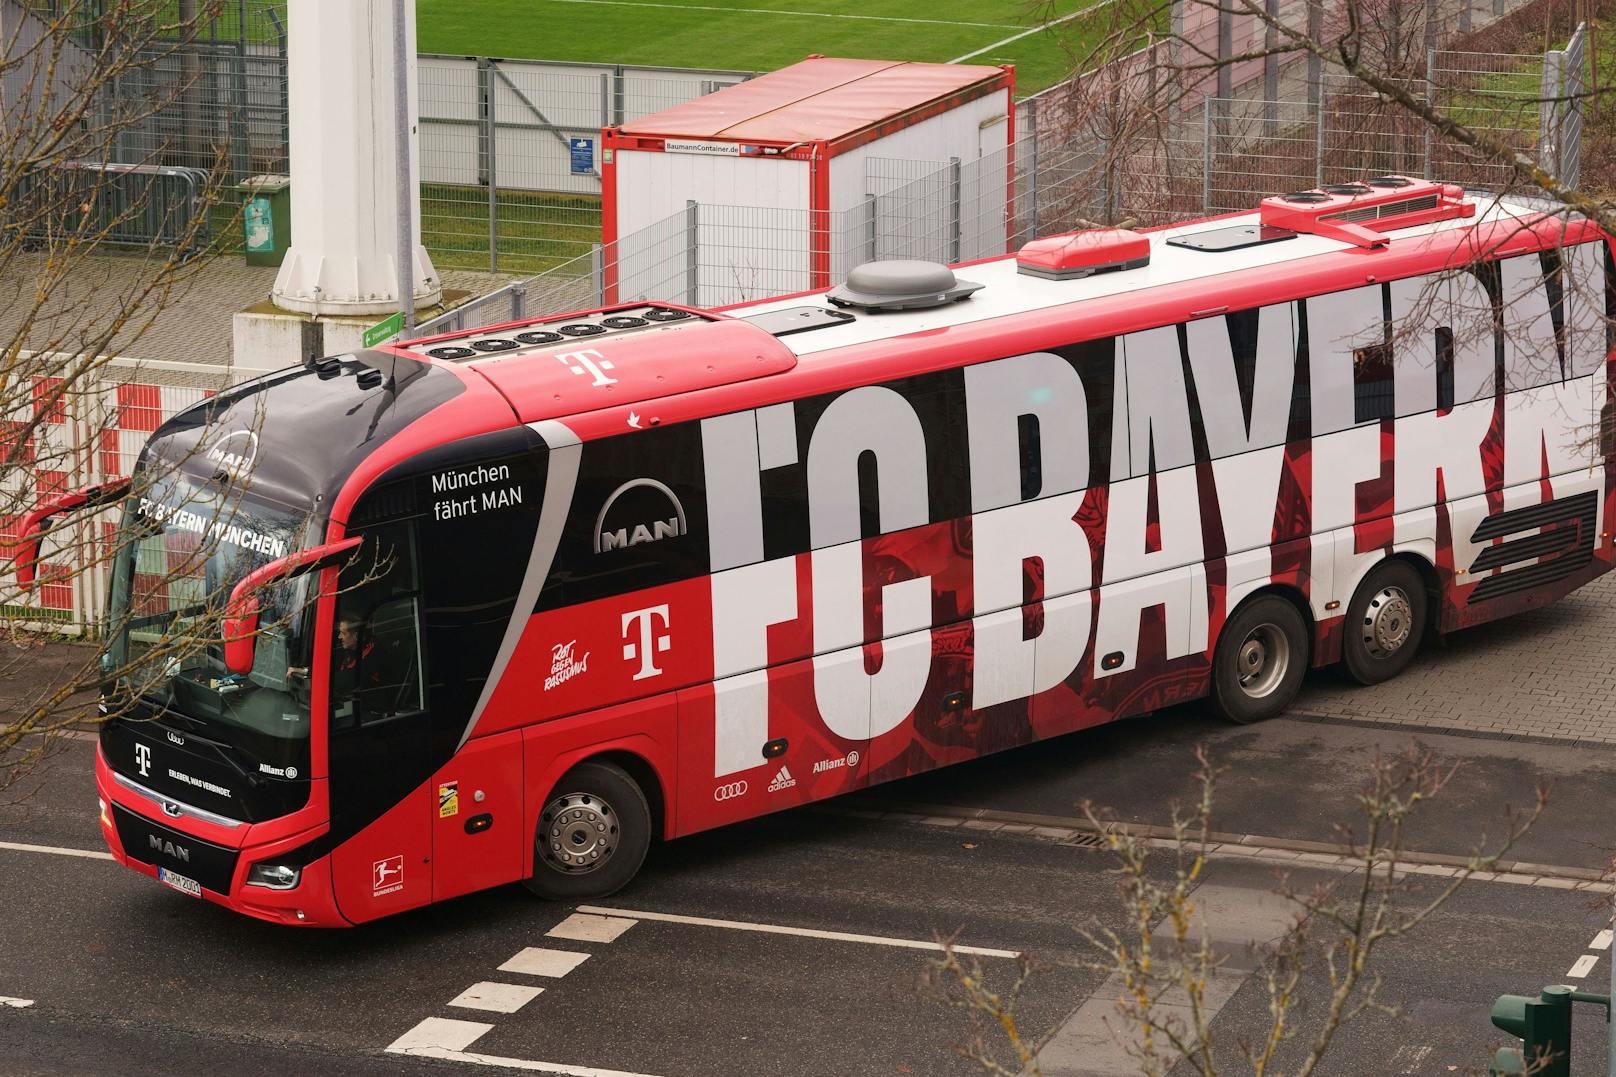 Leroy Sane fehlte an Bord des Bayern-Busses. 